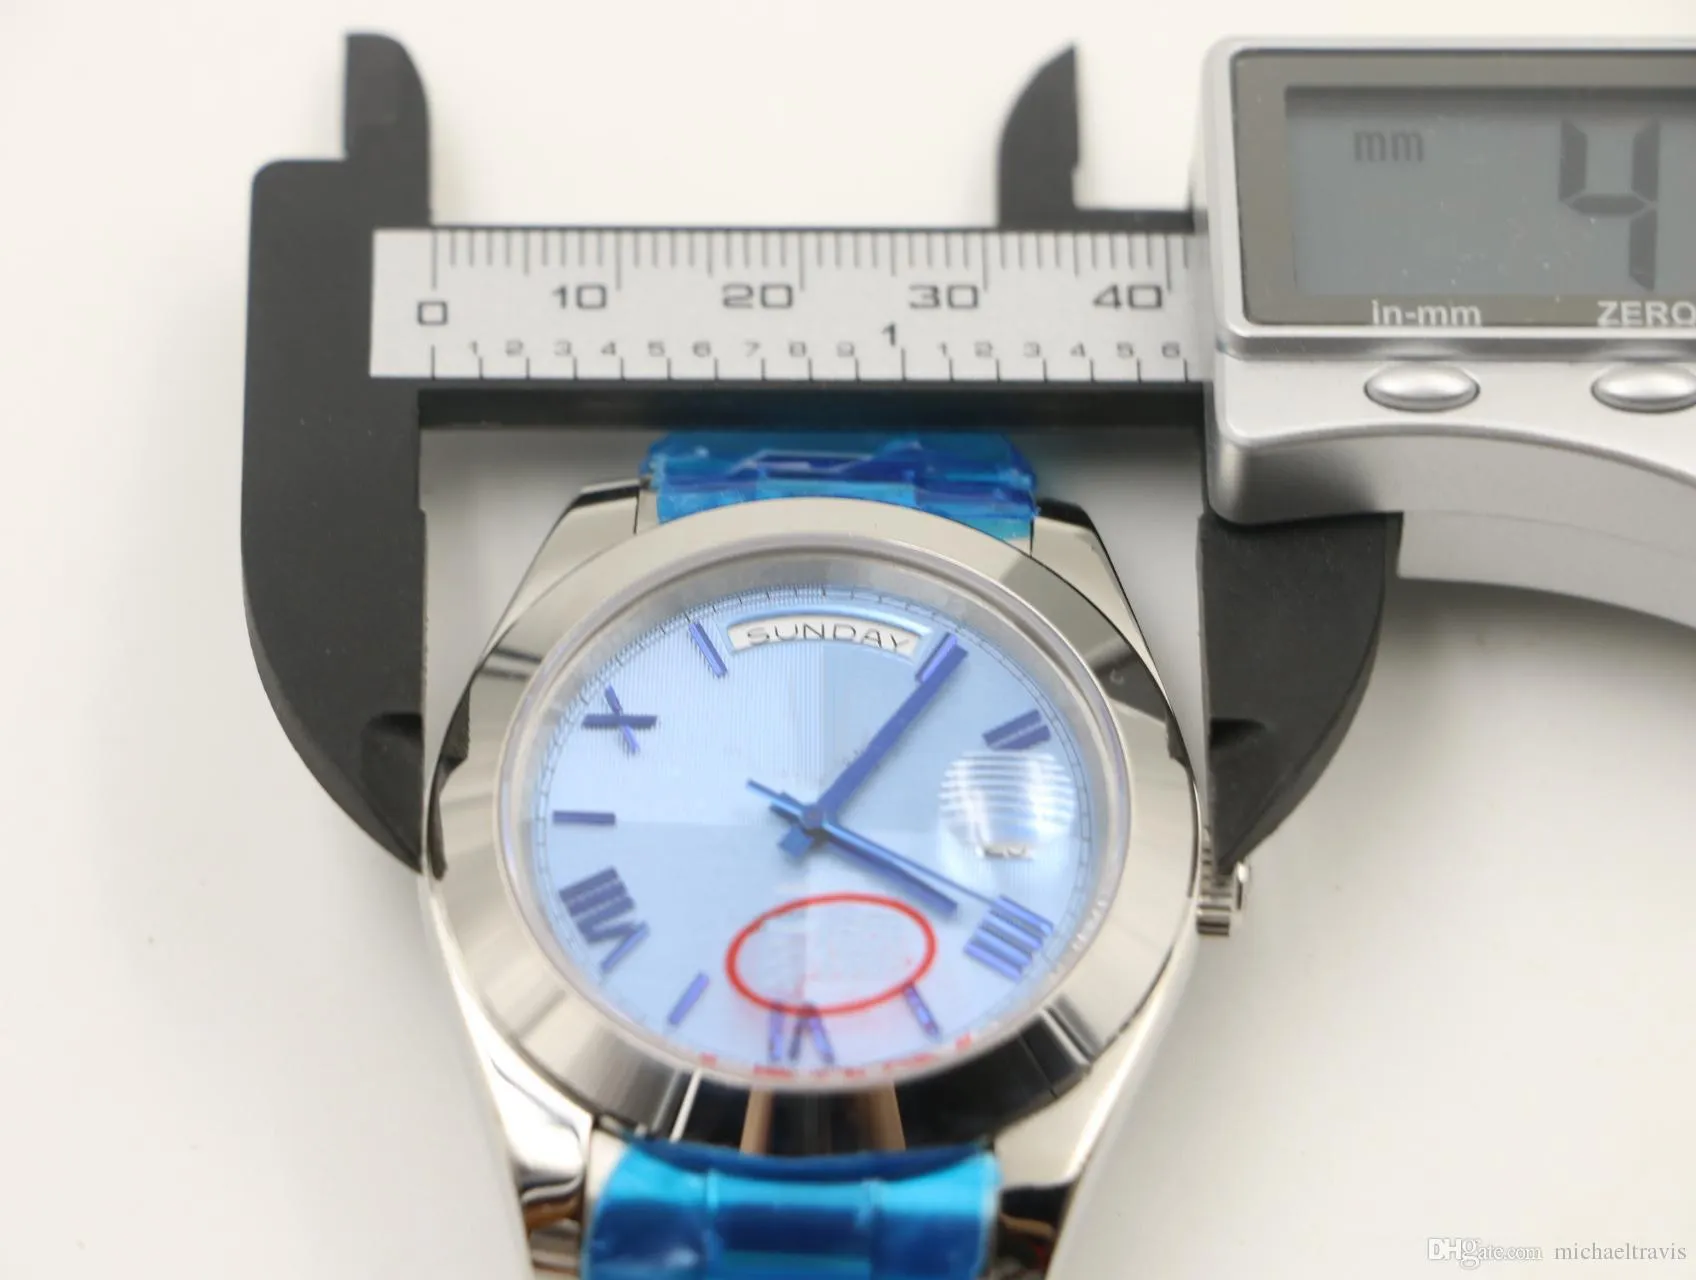 Reloj automático clásico para hombre de 40 mm Relojes con esfera redonda a rayas azules correa presidencial inoxidable 268i